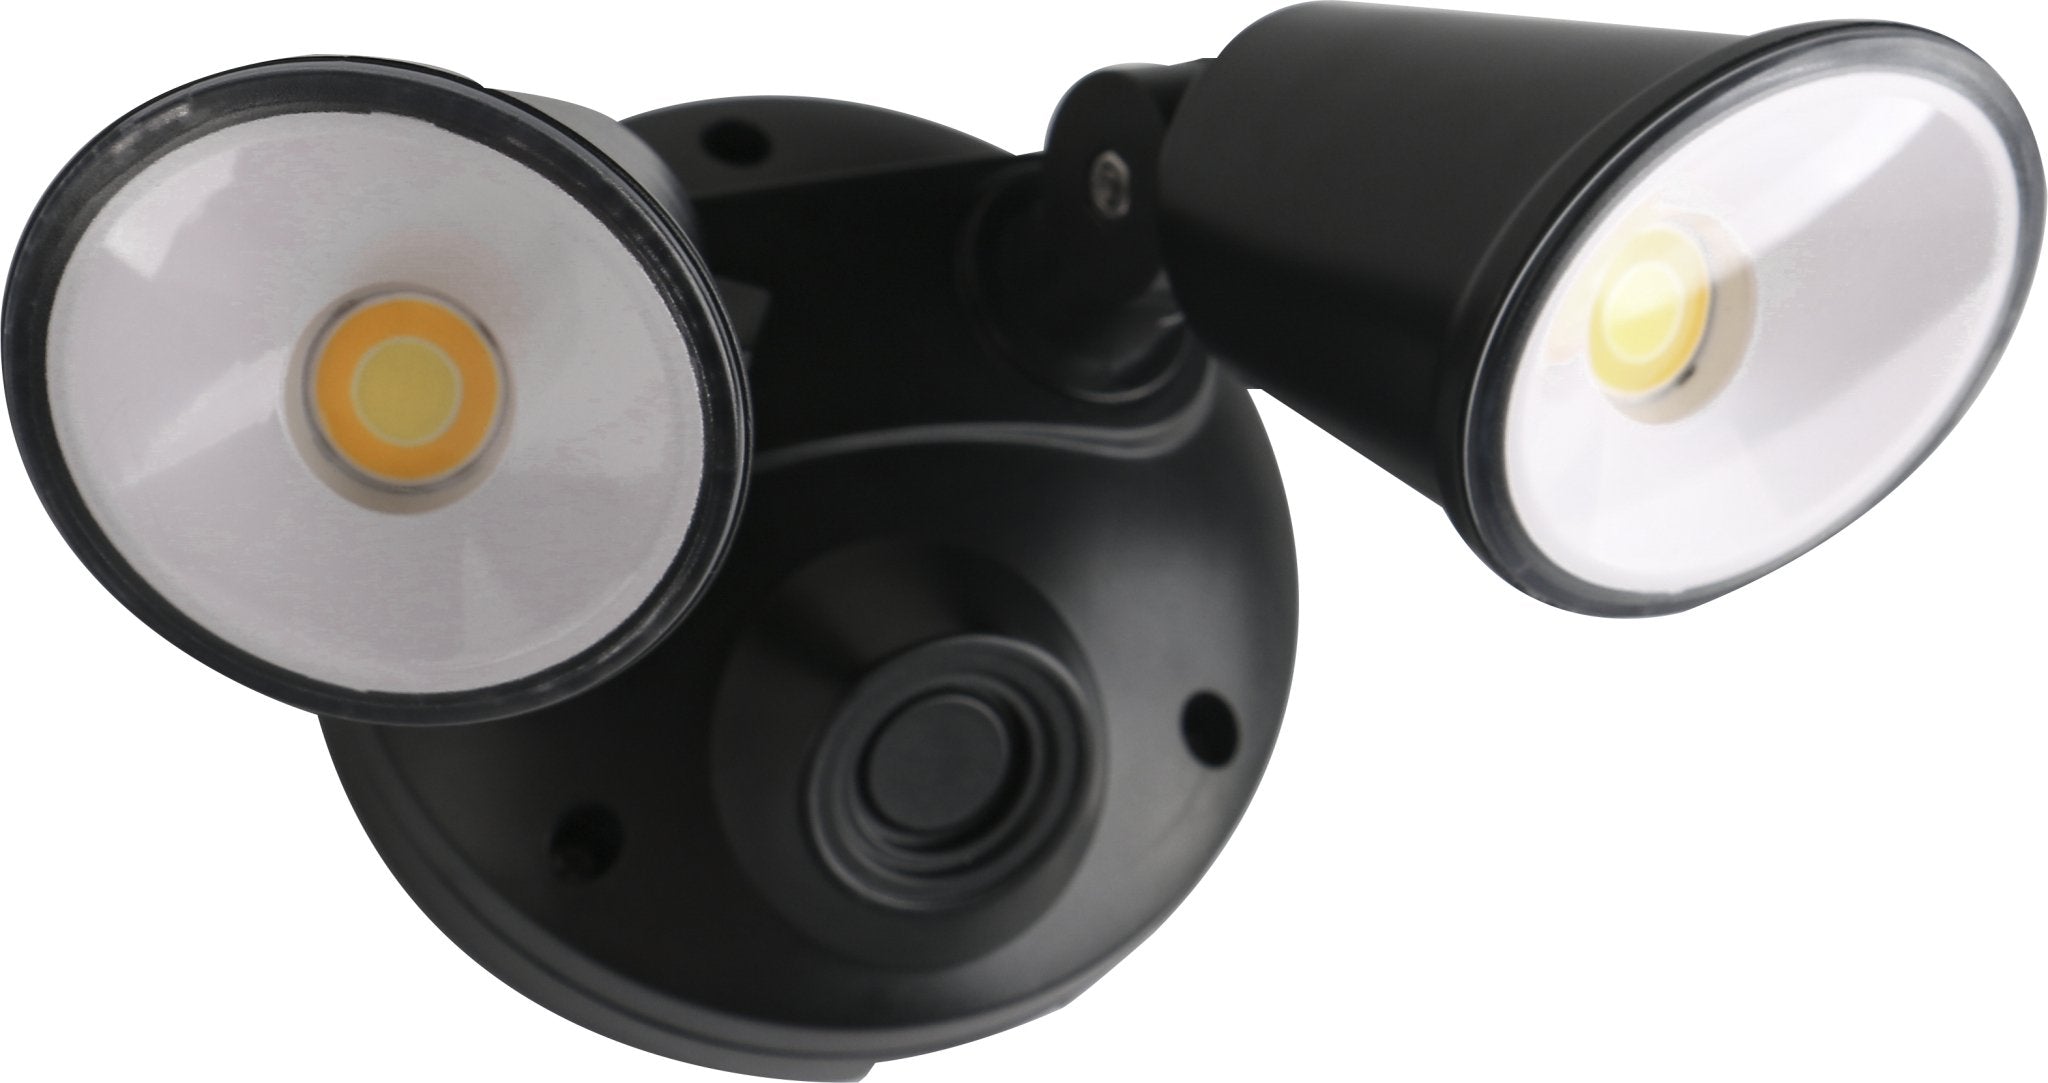 Defender Exterior LED Security Light Twin 20w Tri Colour in Matt Black - Mases LightingMartec